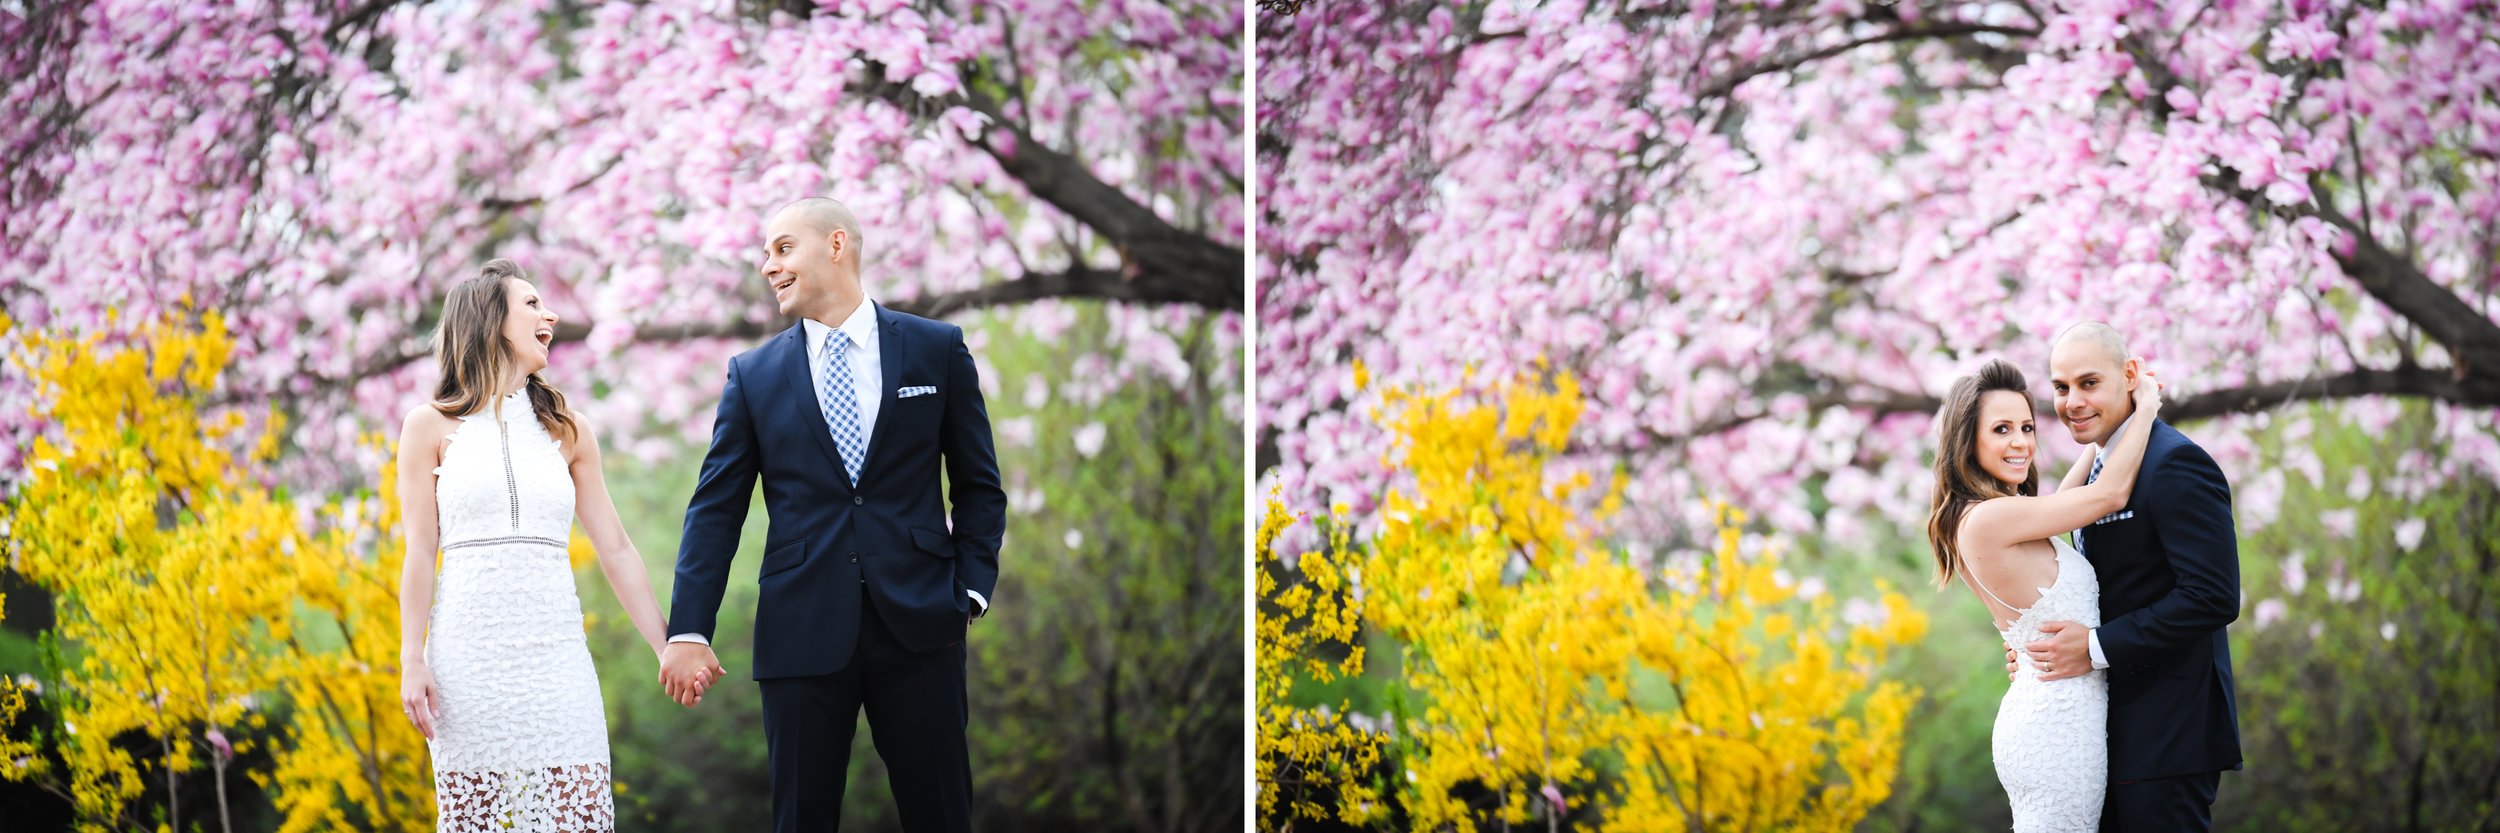 Cherry blossom photographer in Washington DC